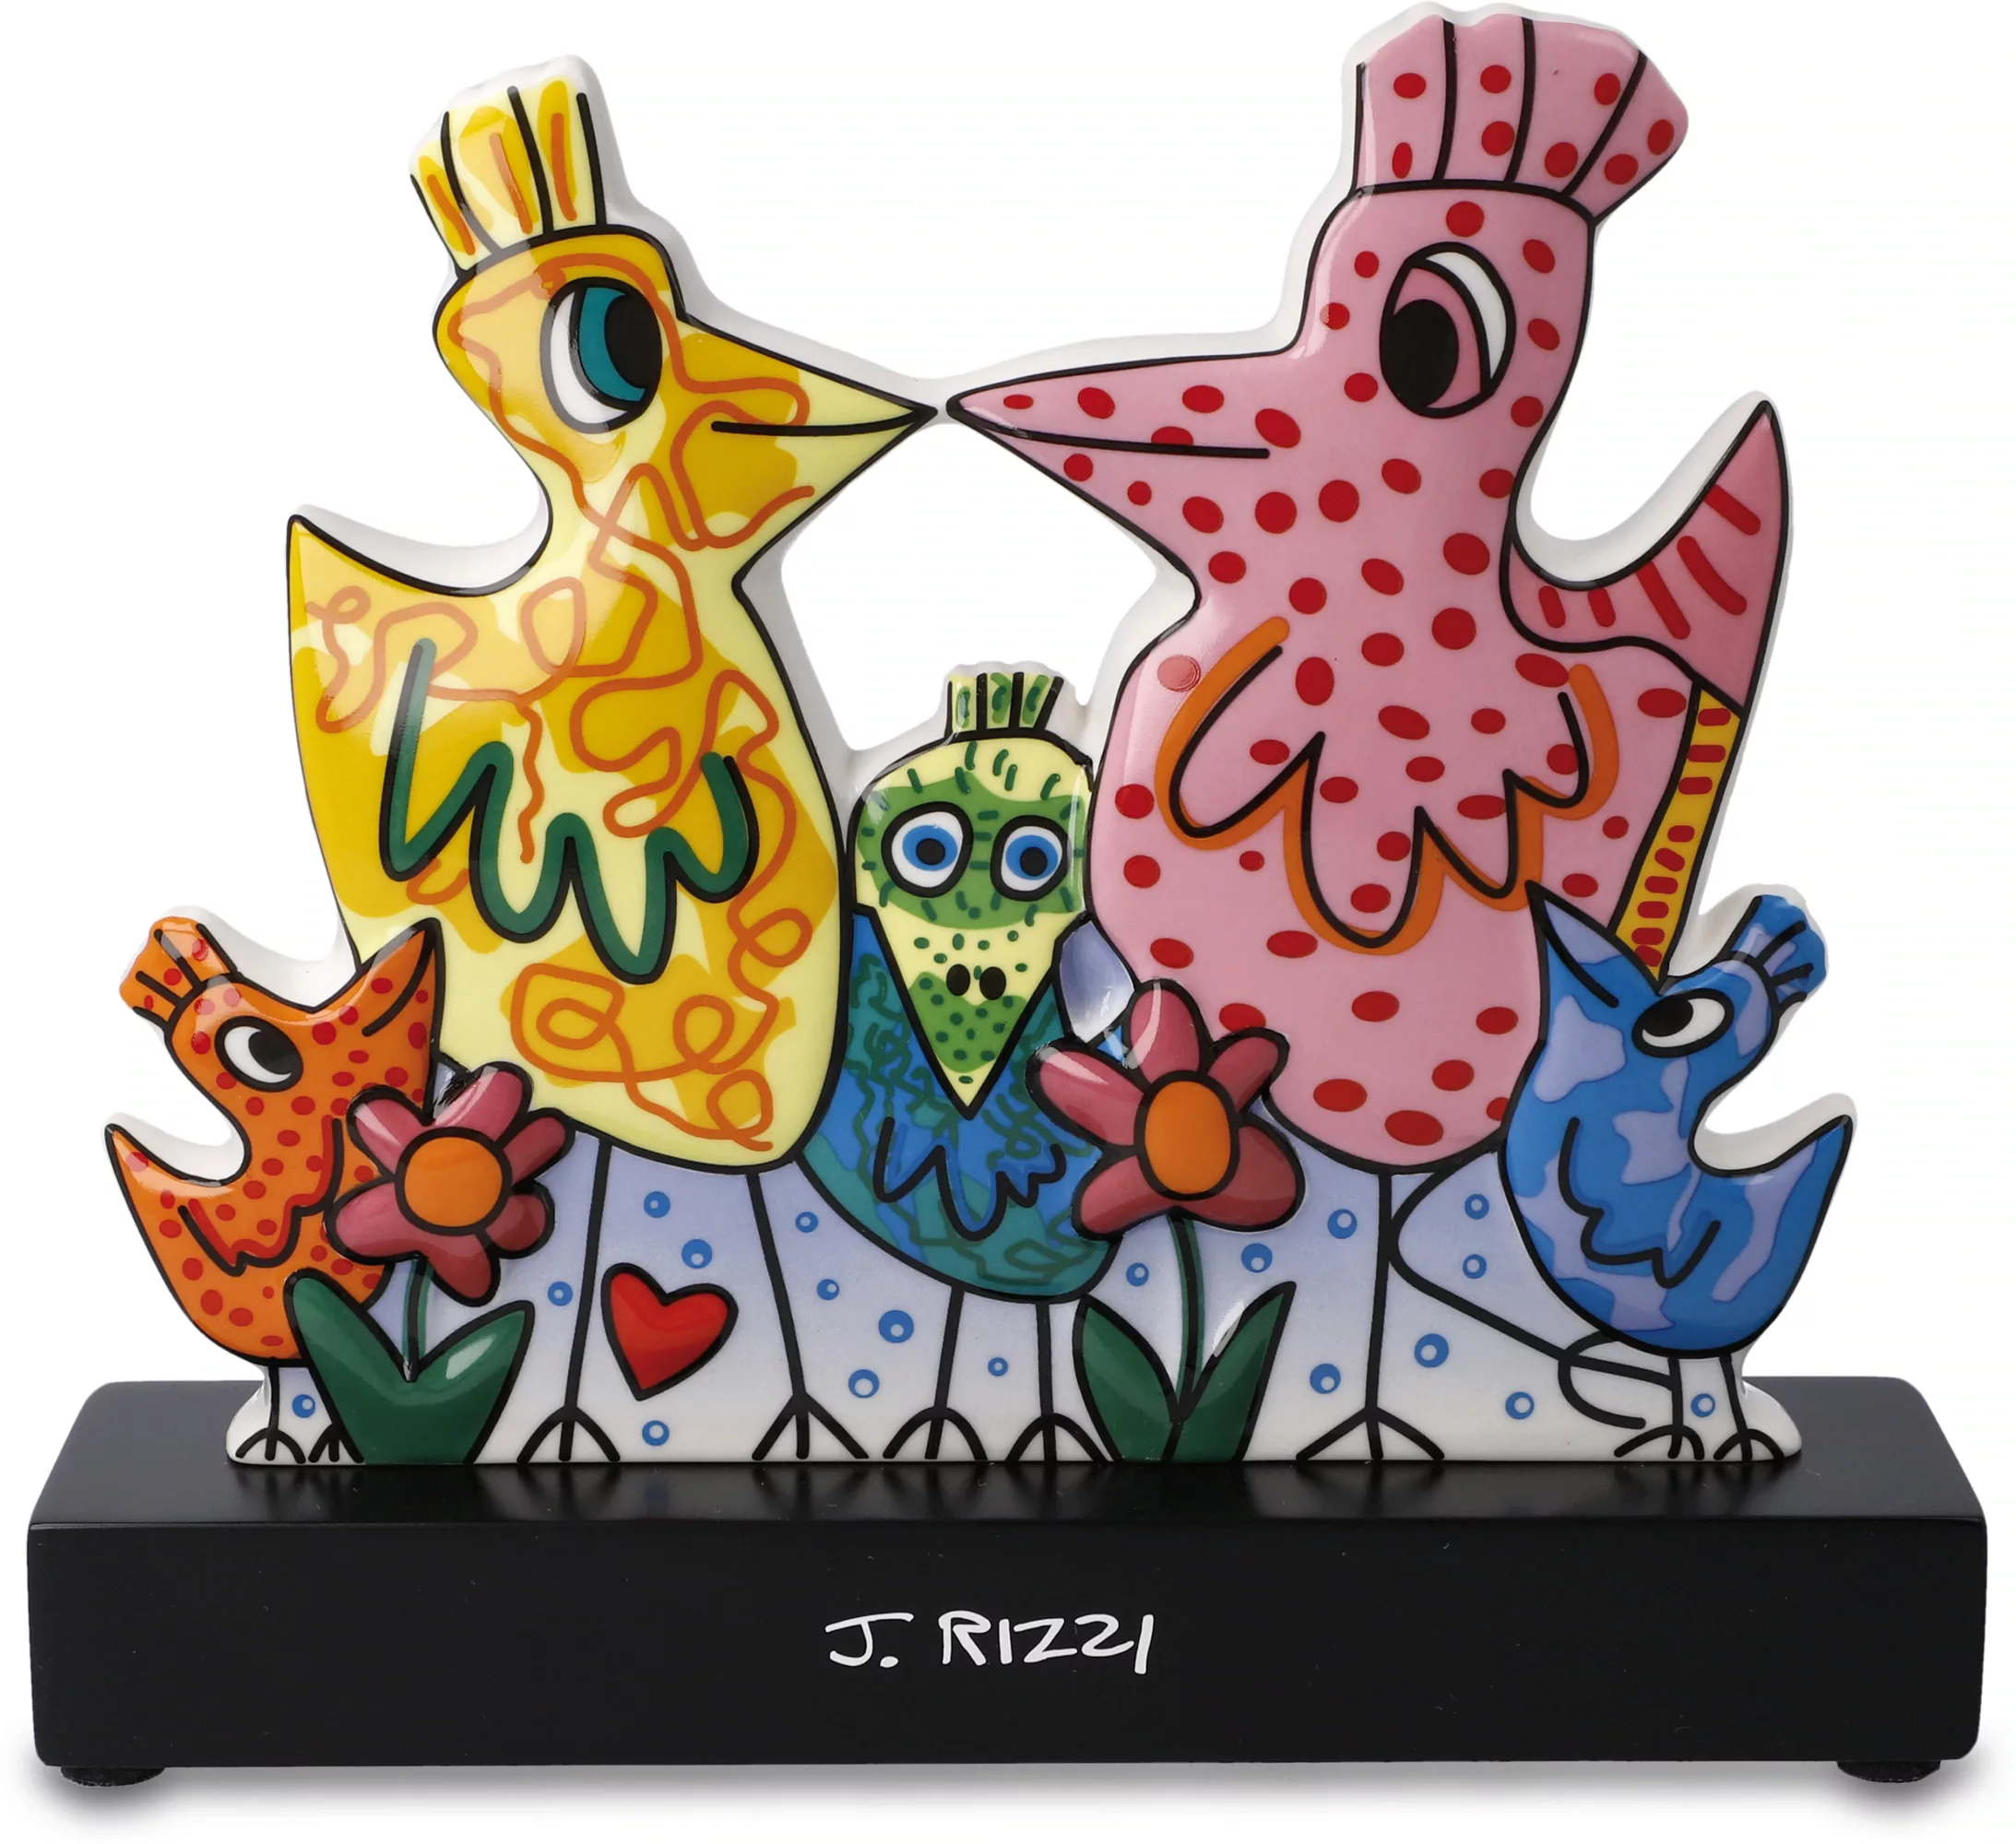 Goebel "Figur James Rizzi - ""Our colorful family""" bunt günstig online kaufen